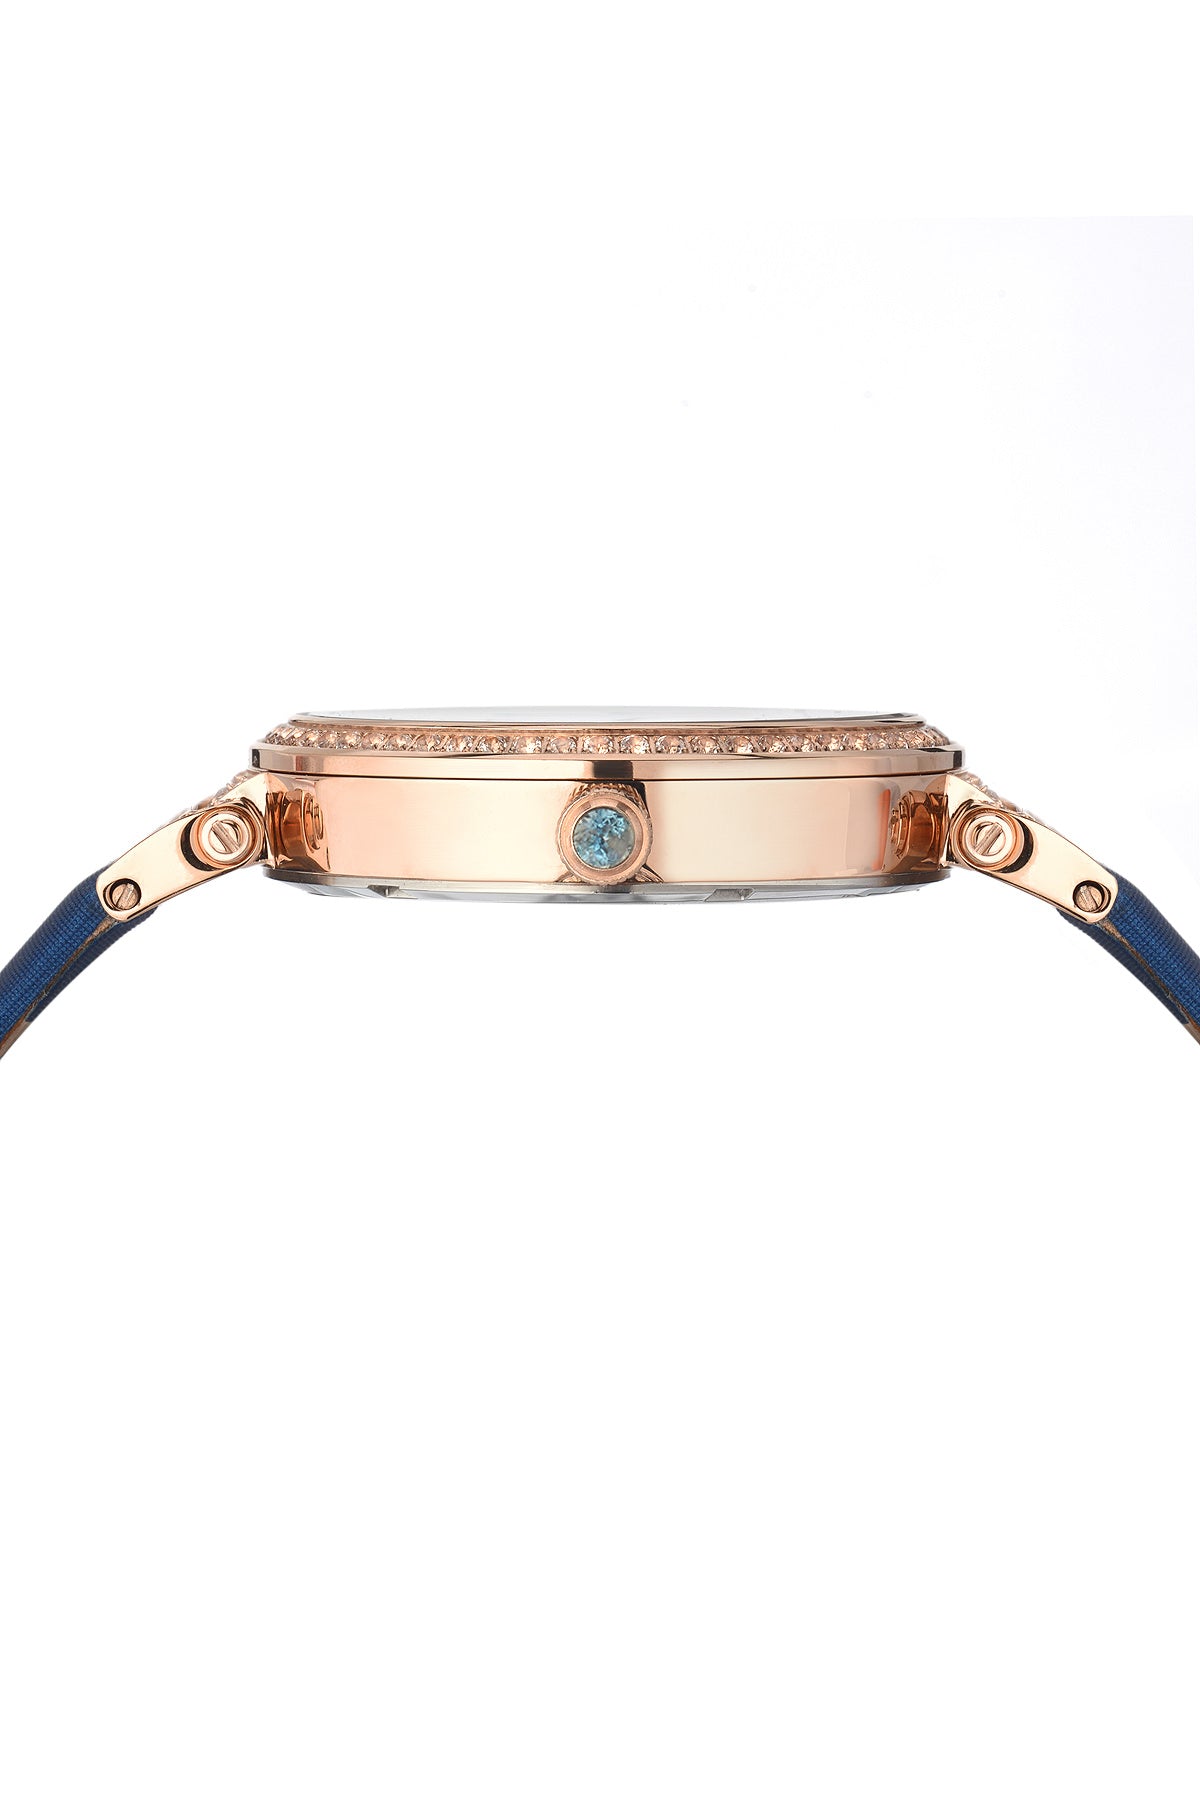 Porsamo Bleu Chantal Luxury Topaz Women's Watch, Satin Covered Genuine Leather Band, Rose, Blue 673CCHL